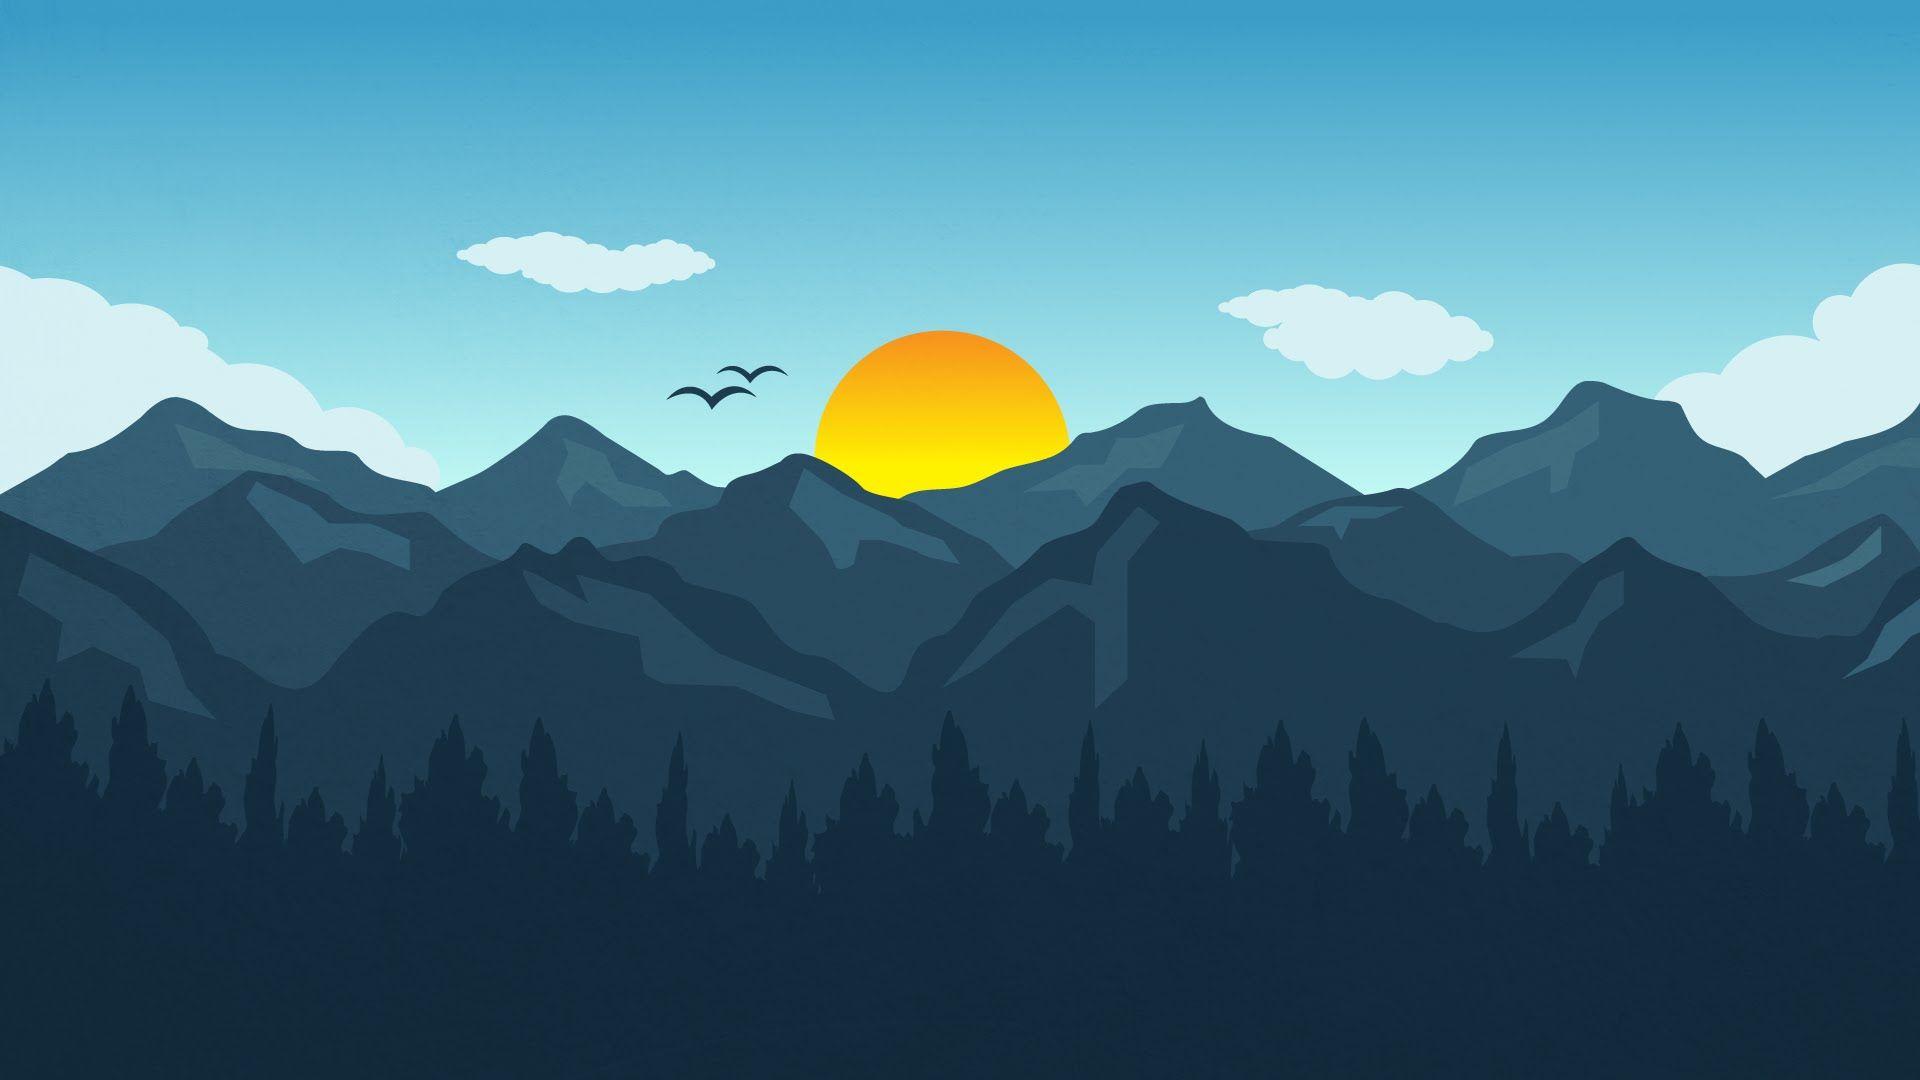 backgrounds free download illustrator